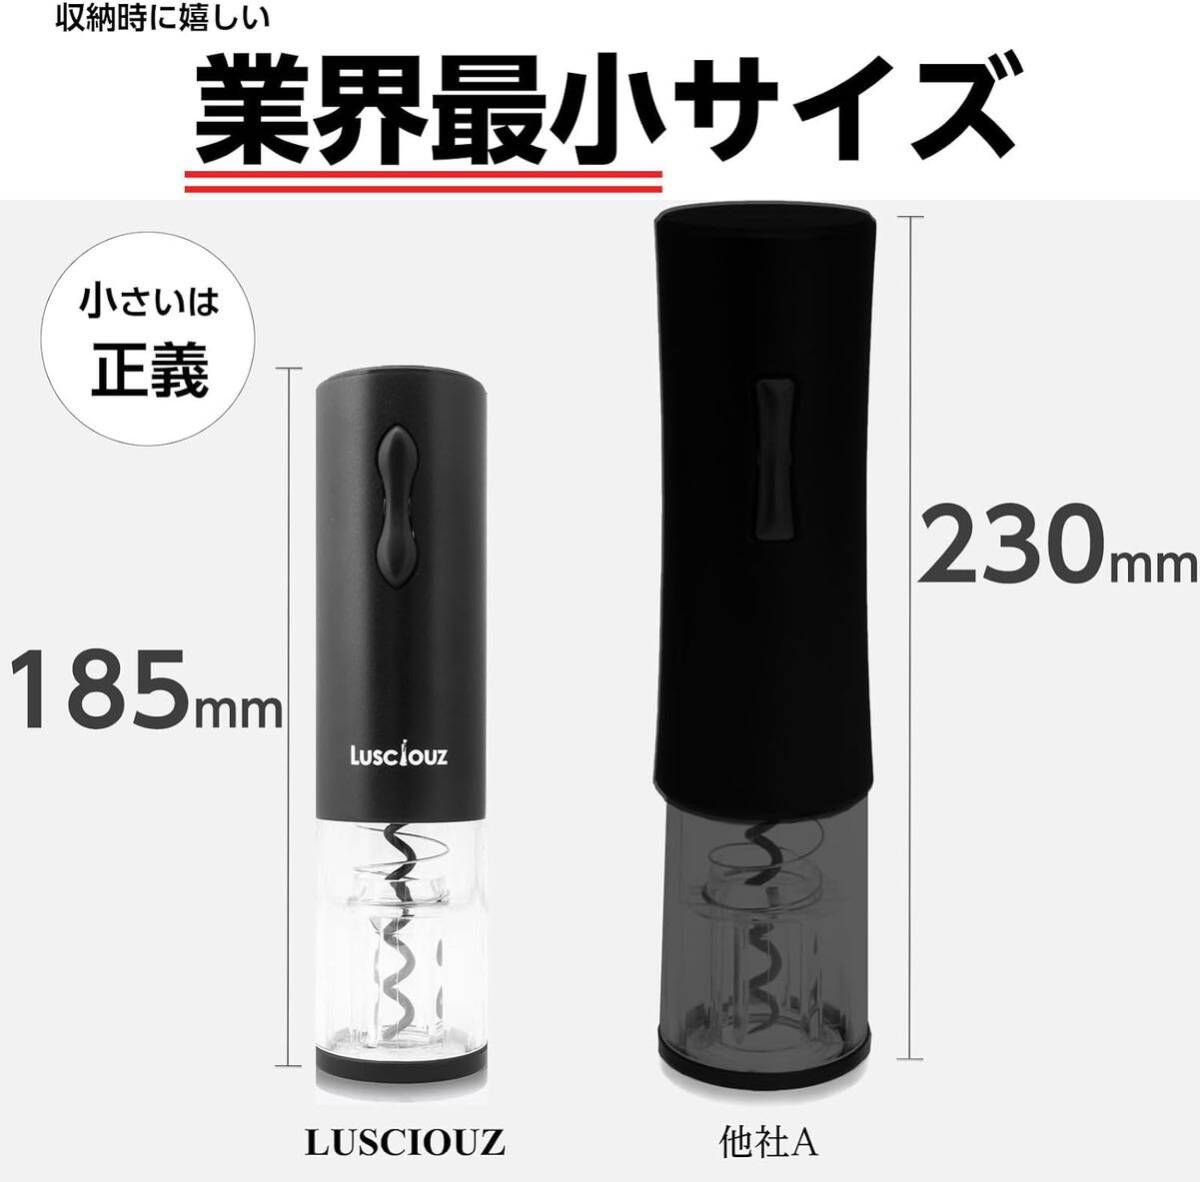 1020ty ー大特価ー LUSCIOUZ 業界最小設計 USB充電式電動ワインオープナー ブラックの画像2